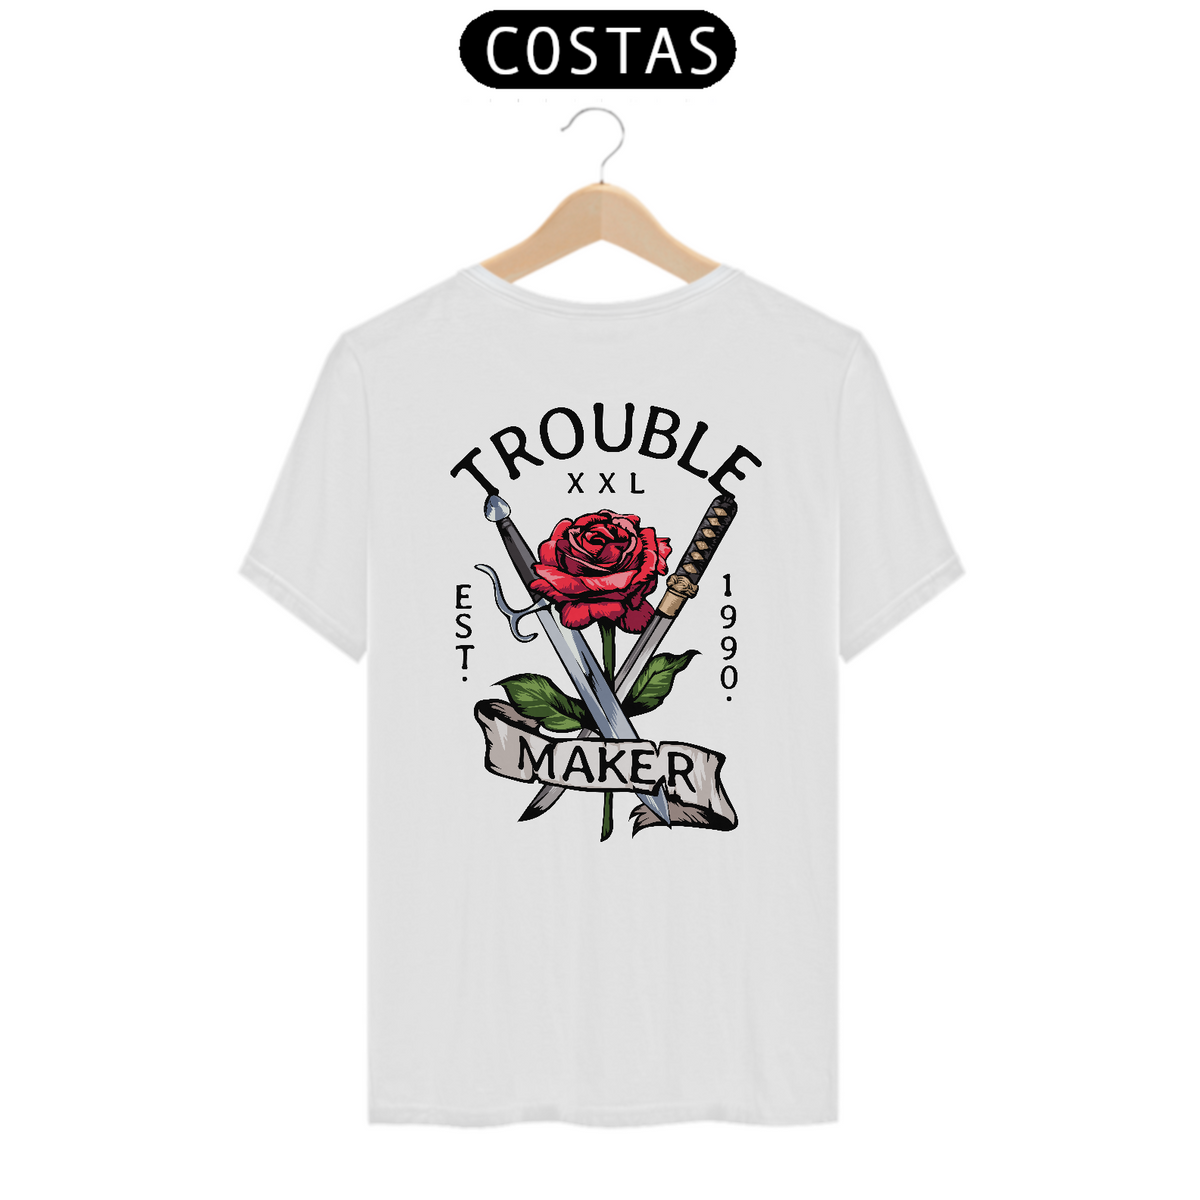 Nome do produto: Camiseta Trouble mkaer